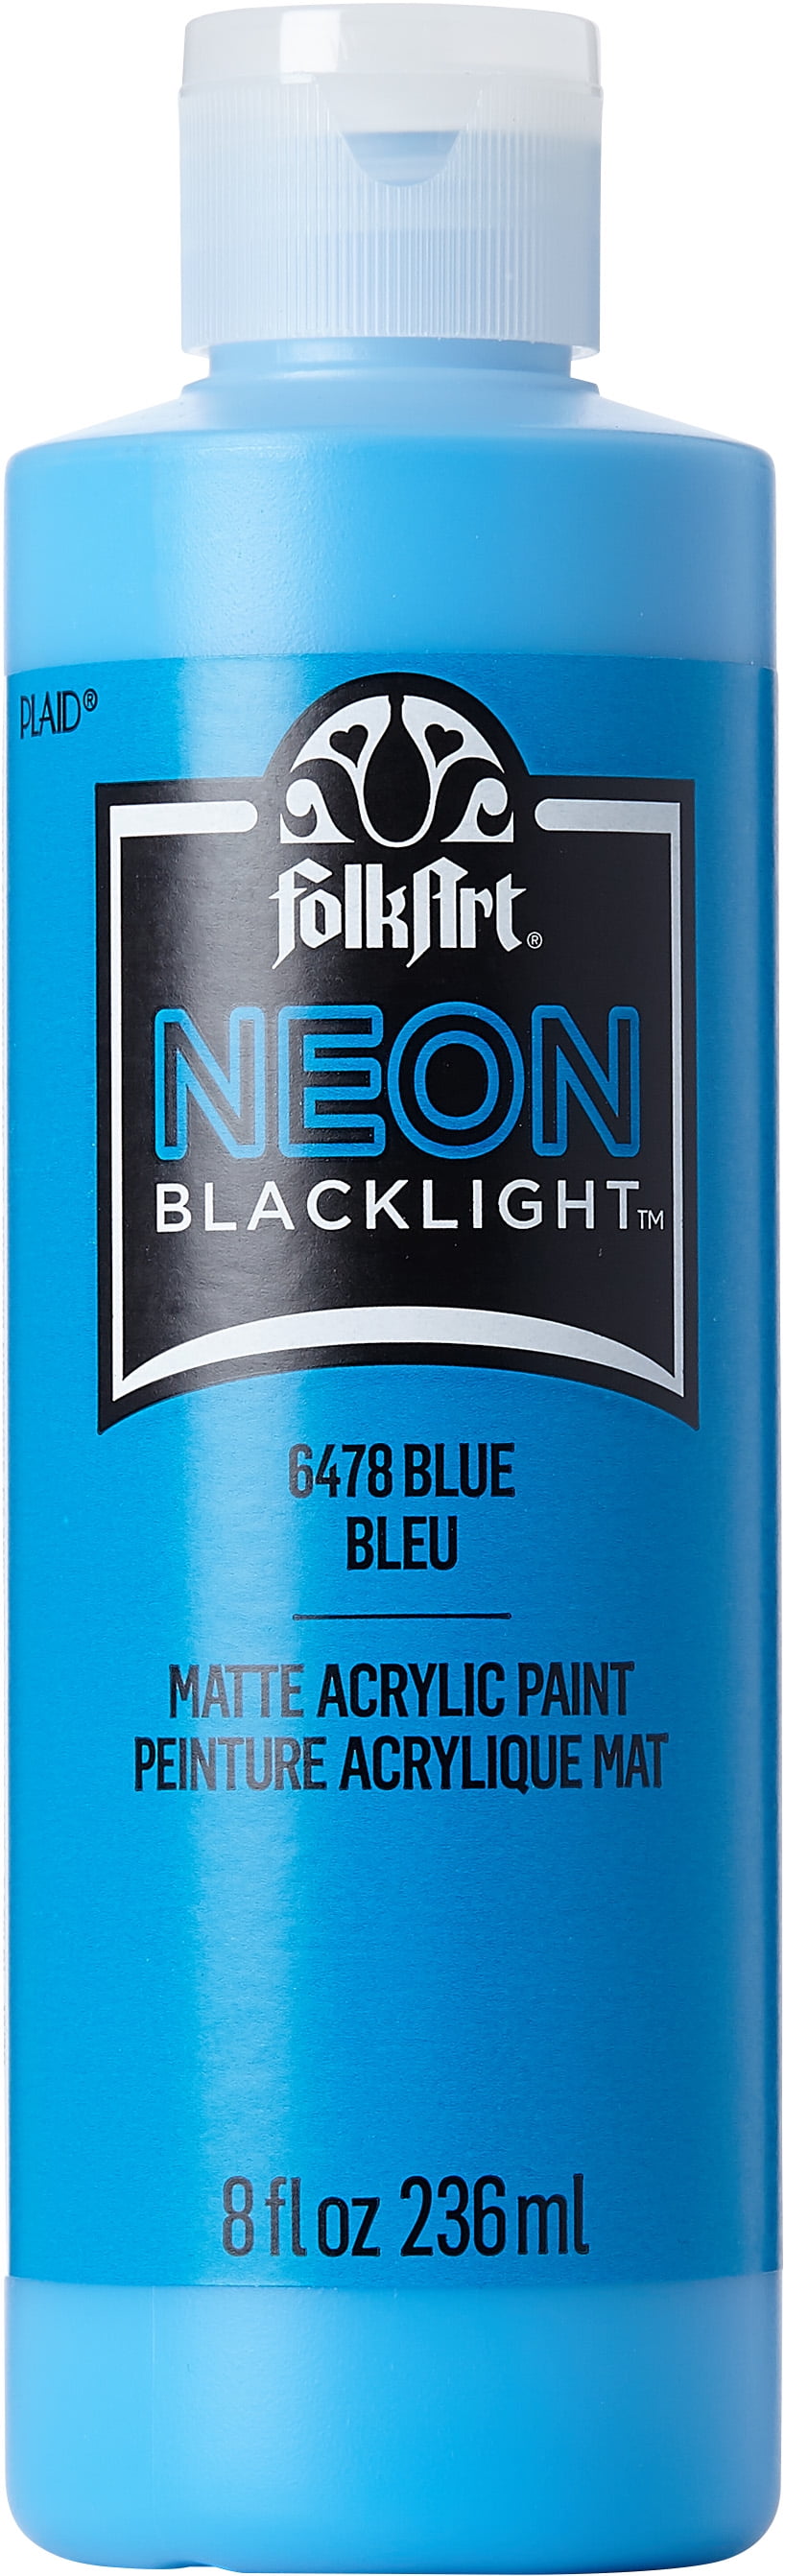 FolkArt Neon Blacklight Acrylic Craft Paint, Matte Finish, Blue, 8 fl oz